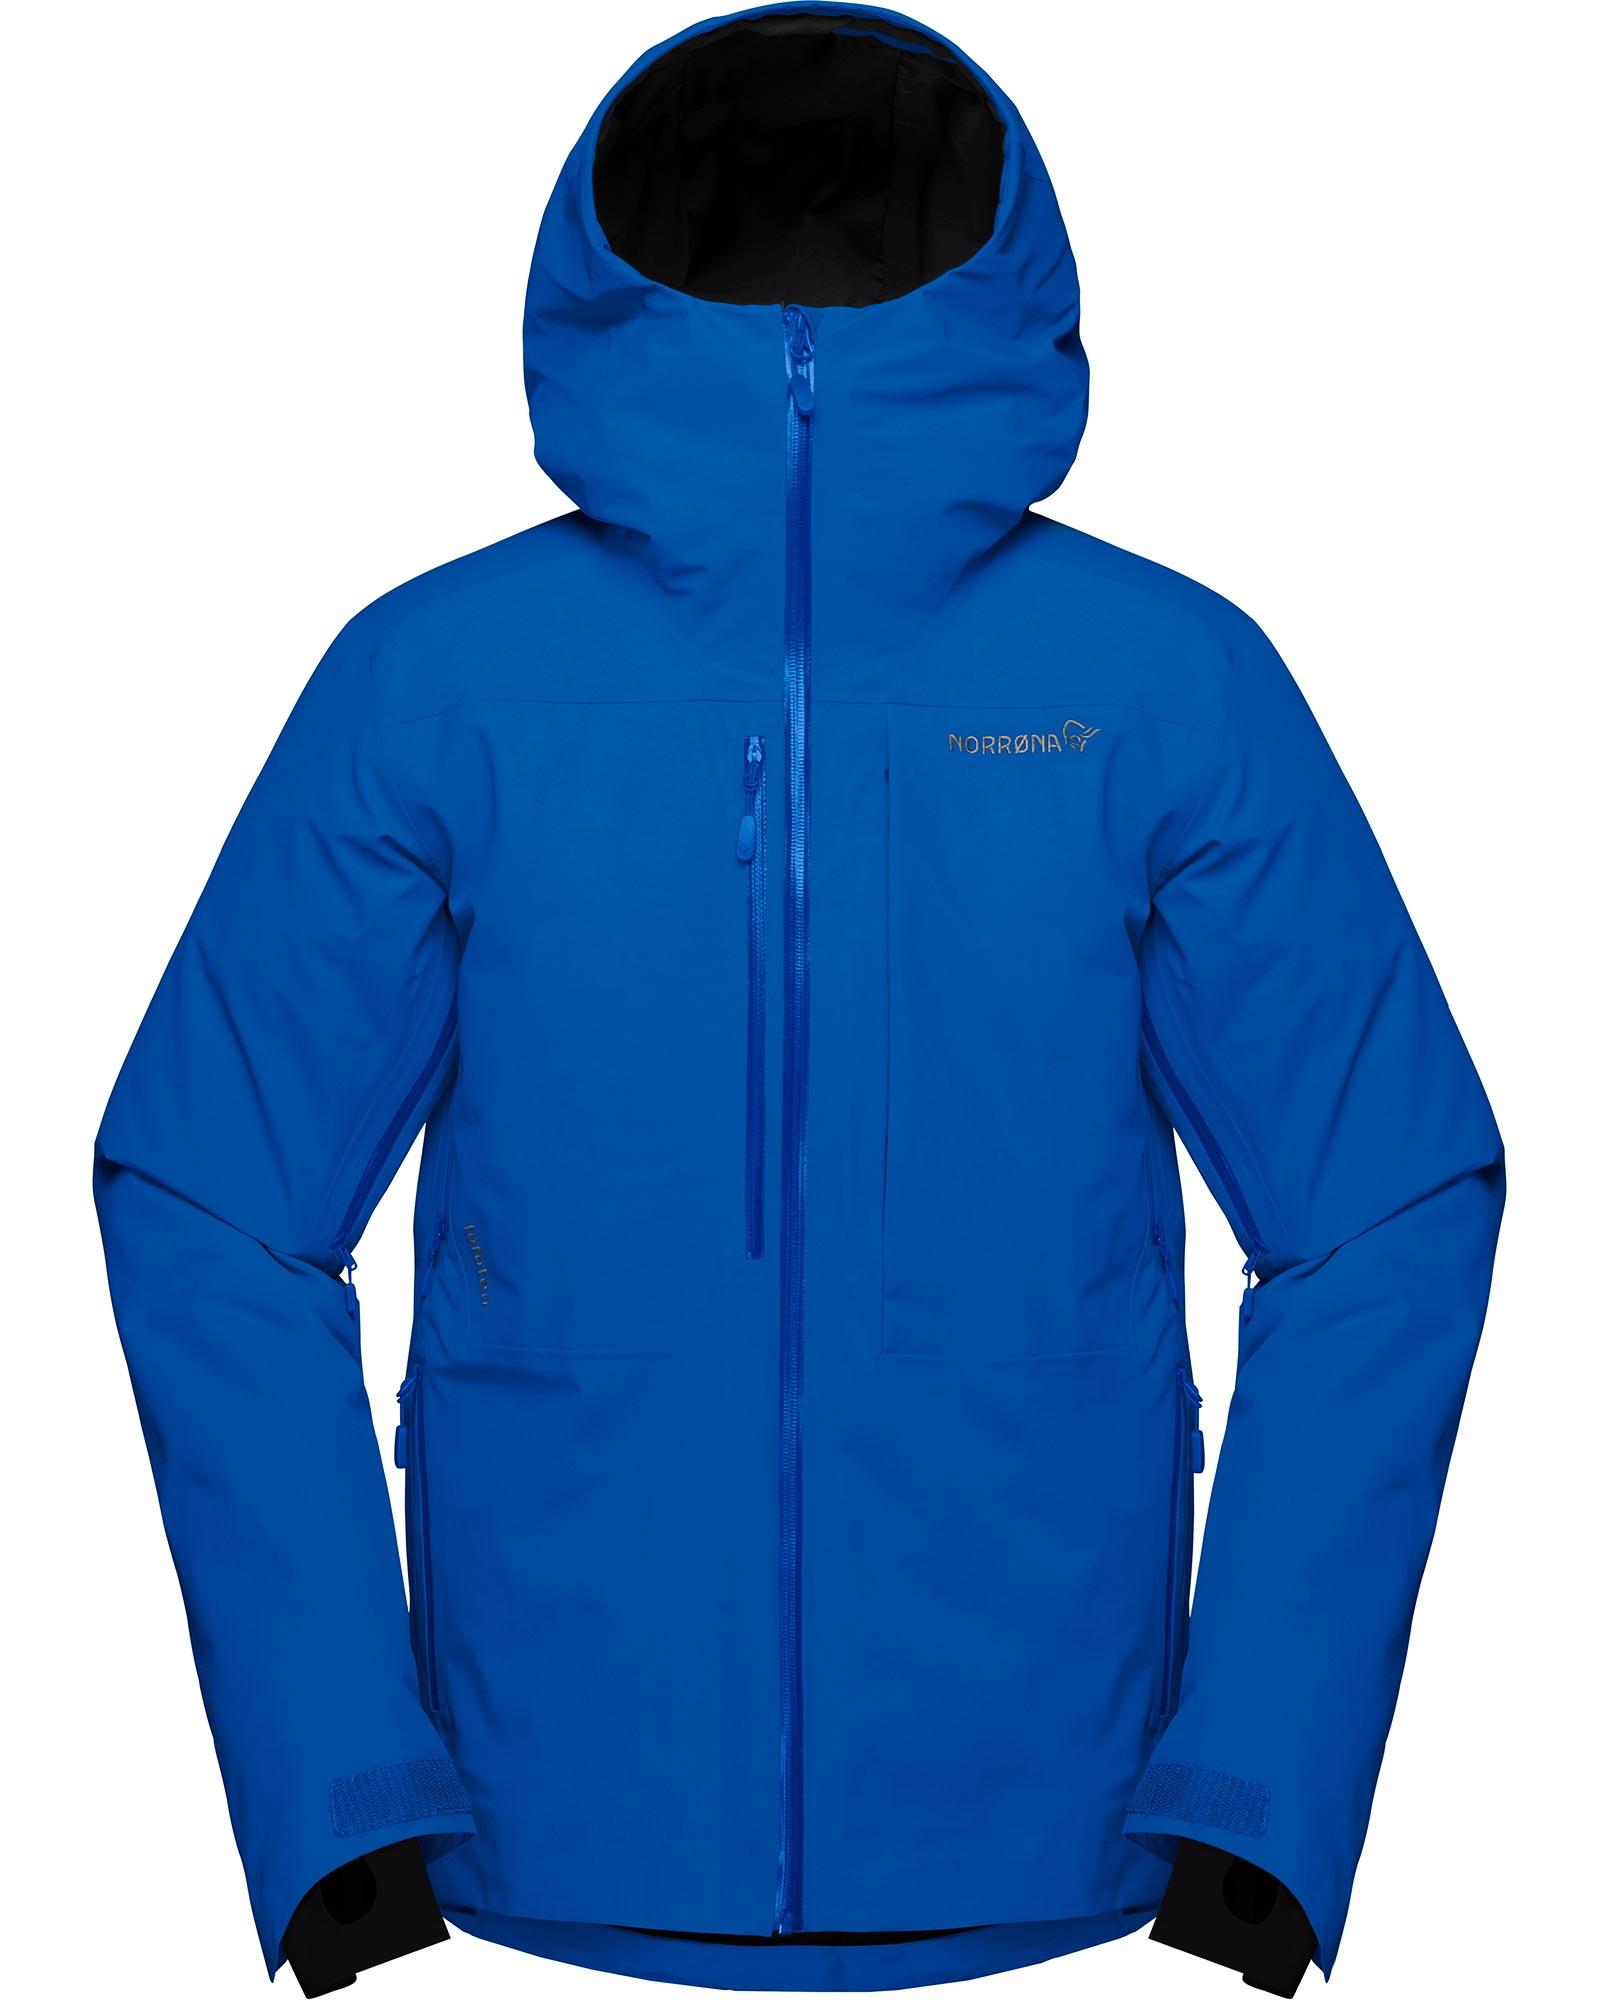 Norrona Lofoten GORE TEX Men’s Insulated Jacket - Olympian Blue S